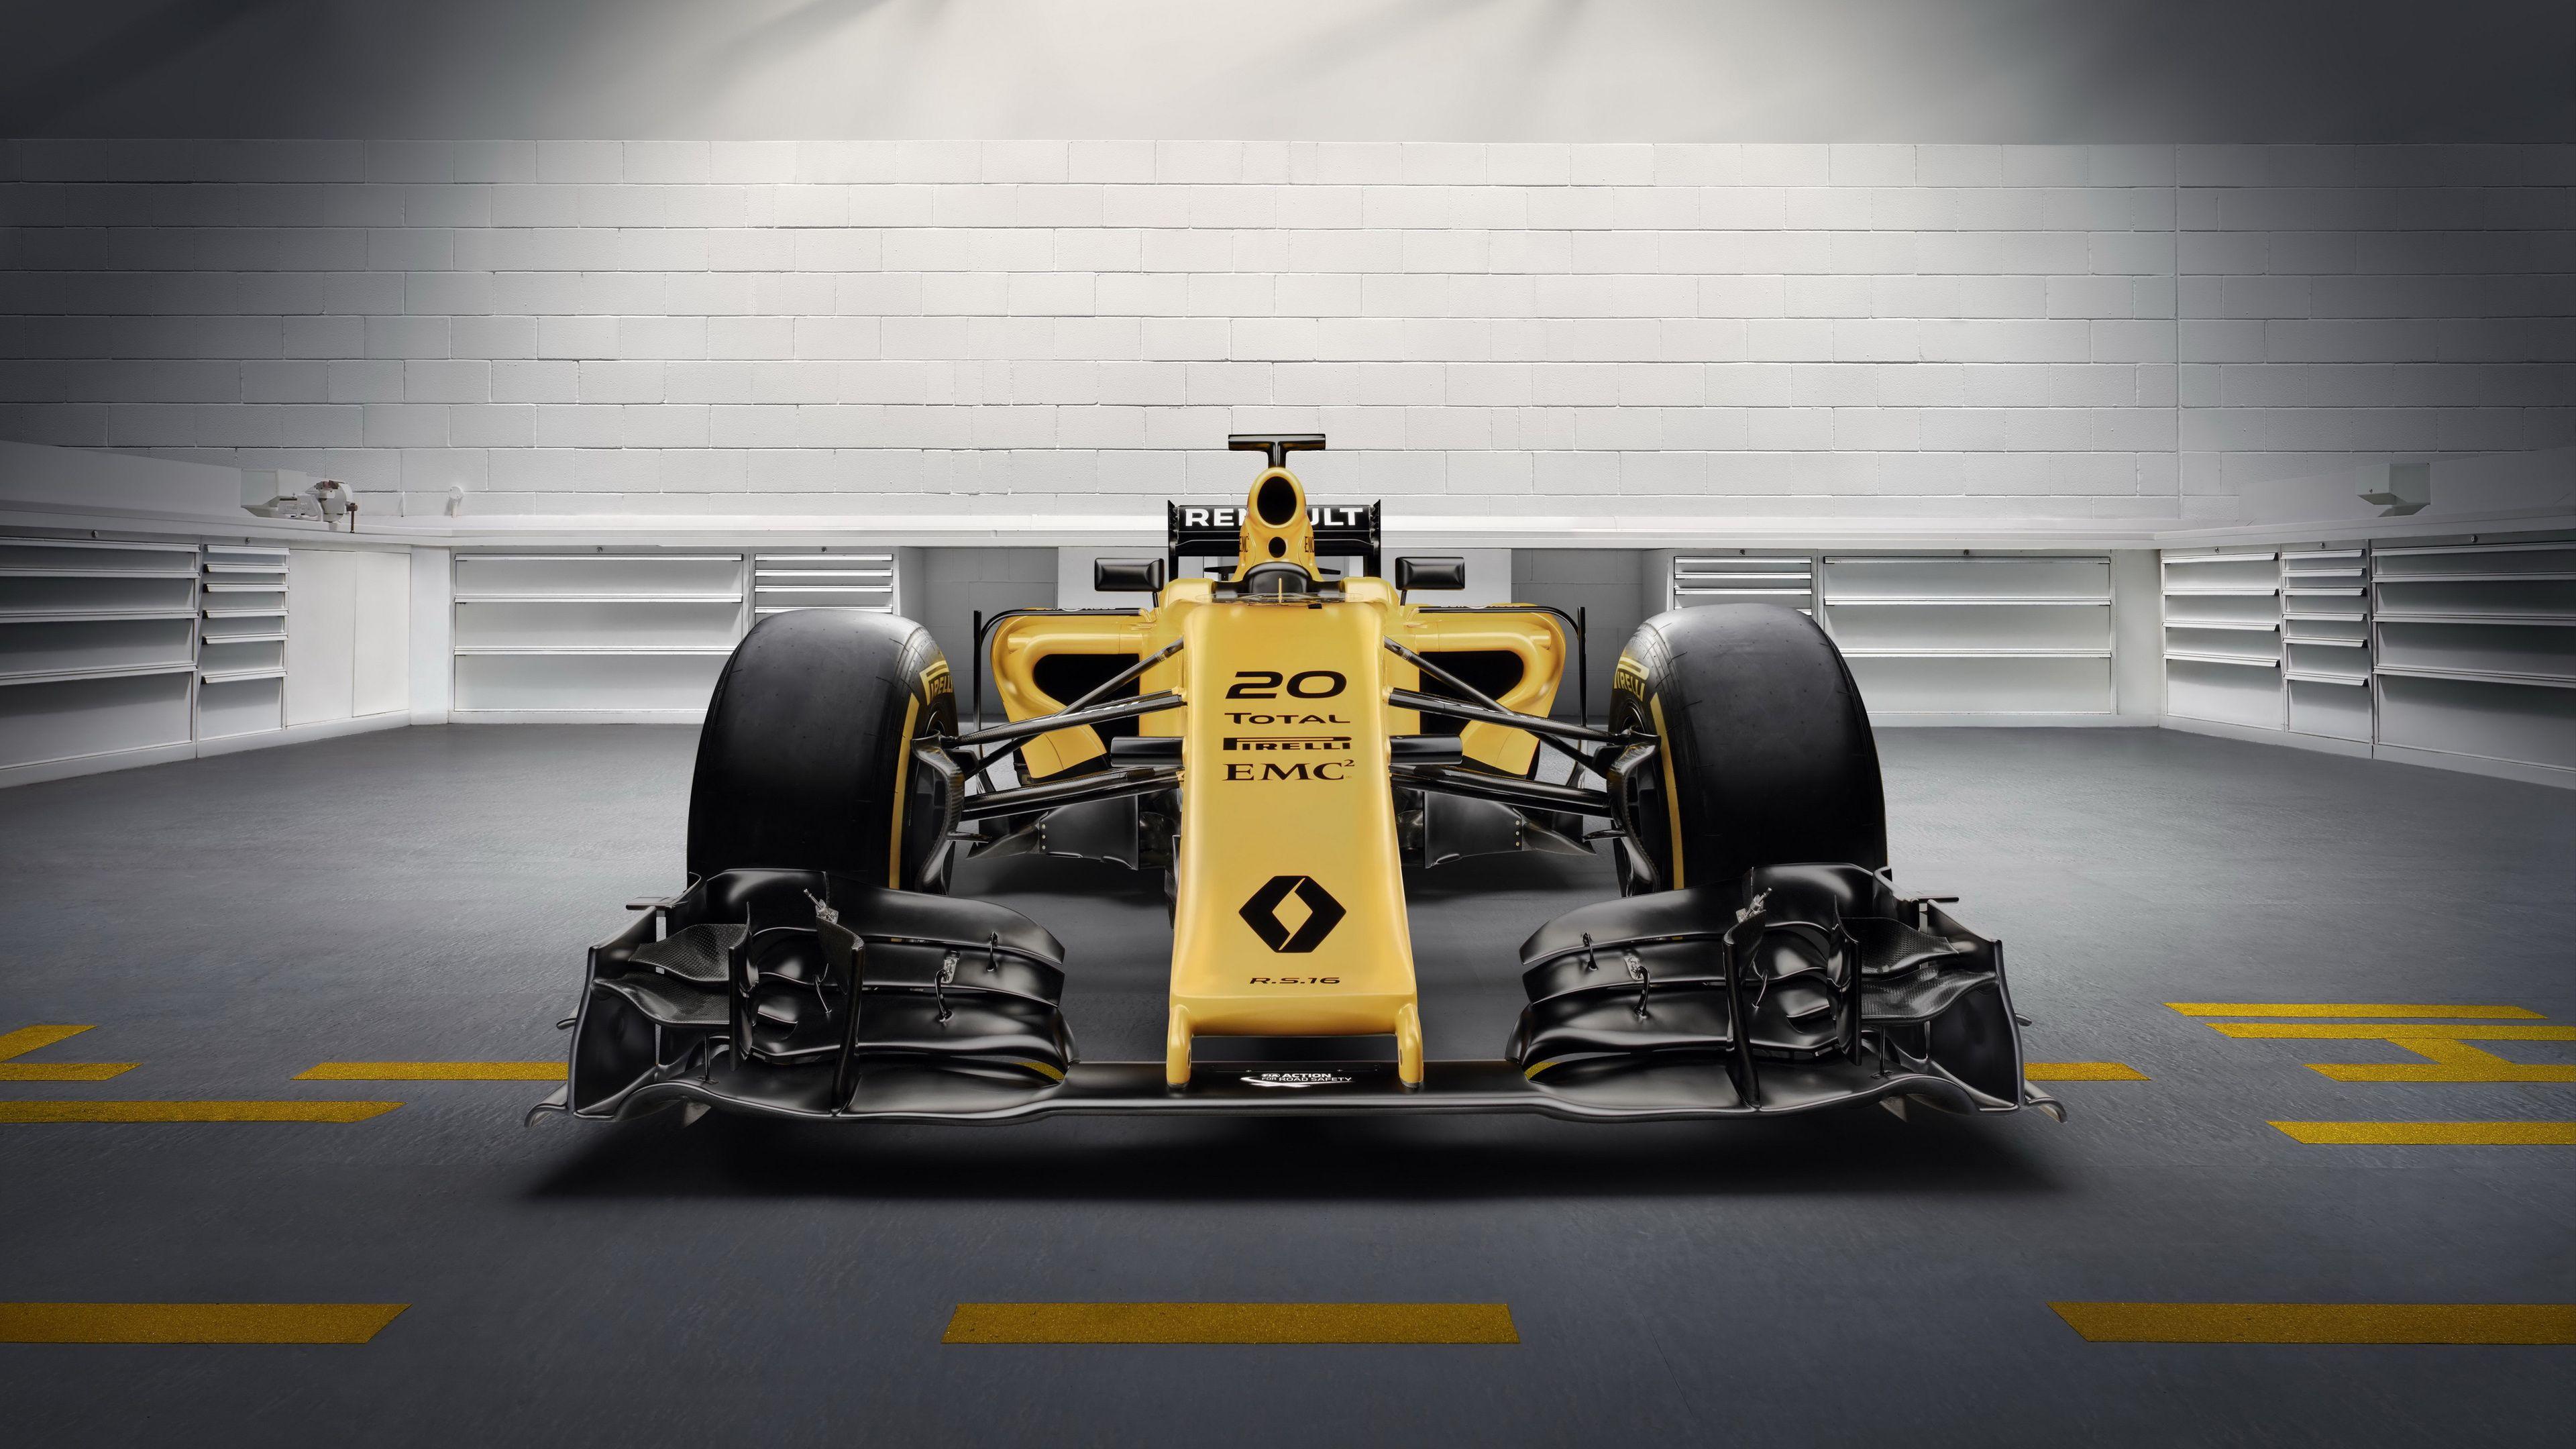 Resize wallpaper. Renault RS16 Formula 1 F1 Race CarSimilar Car